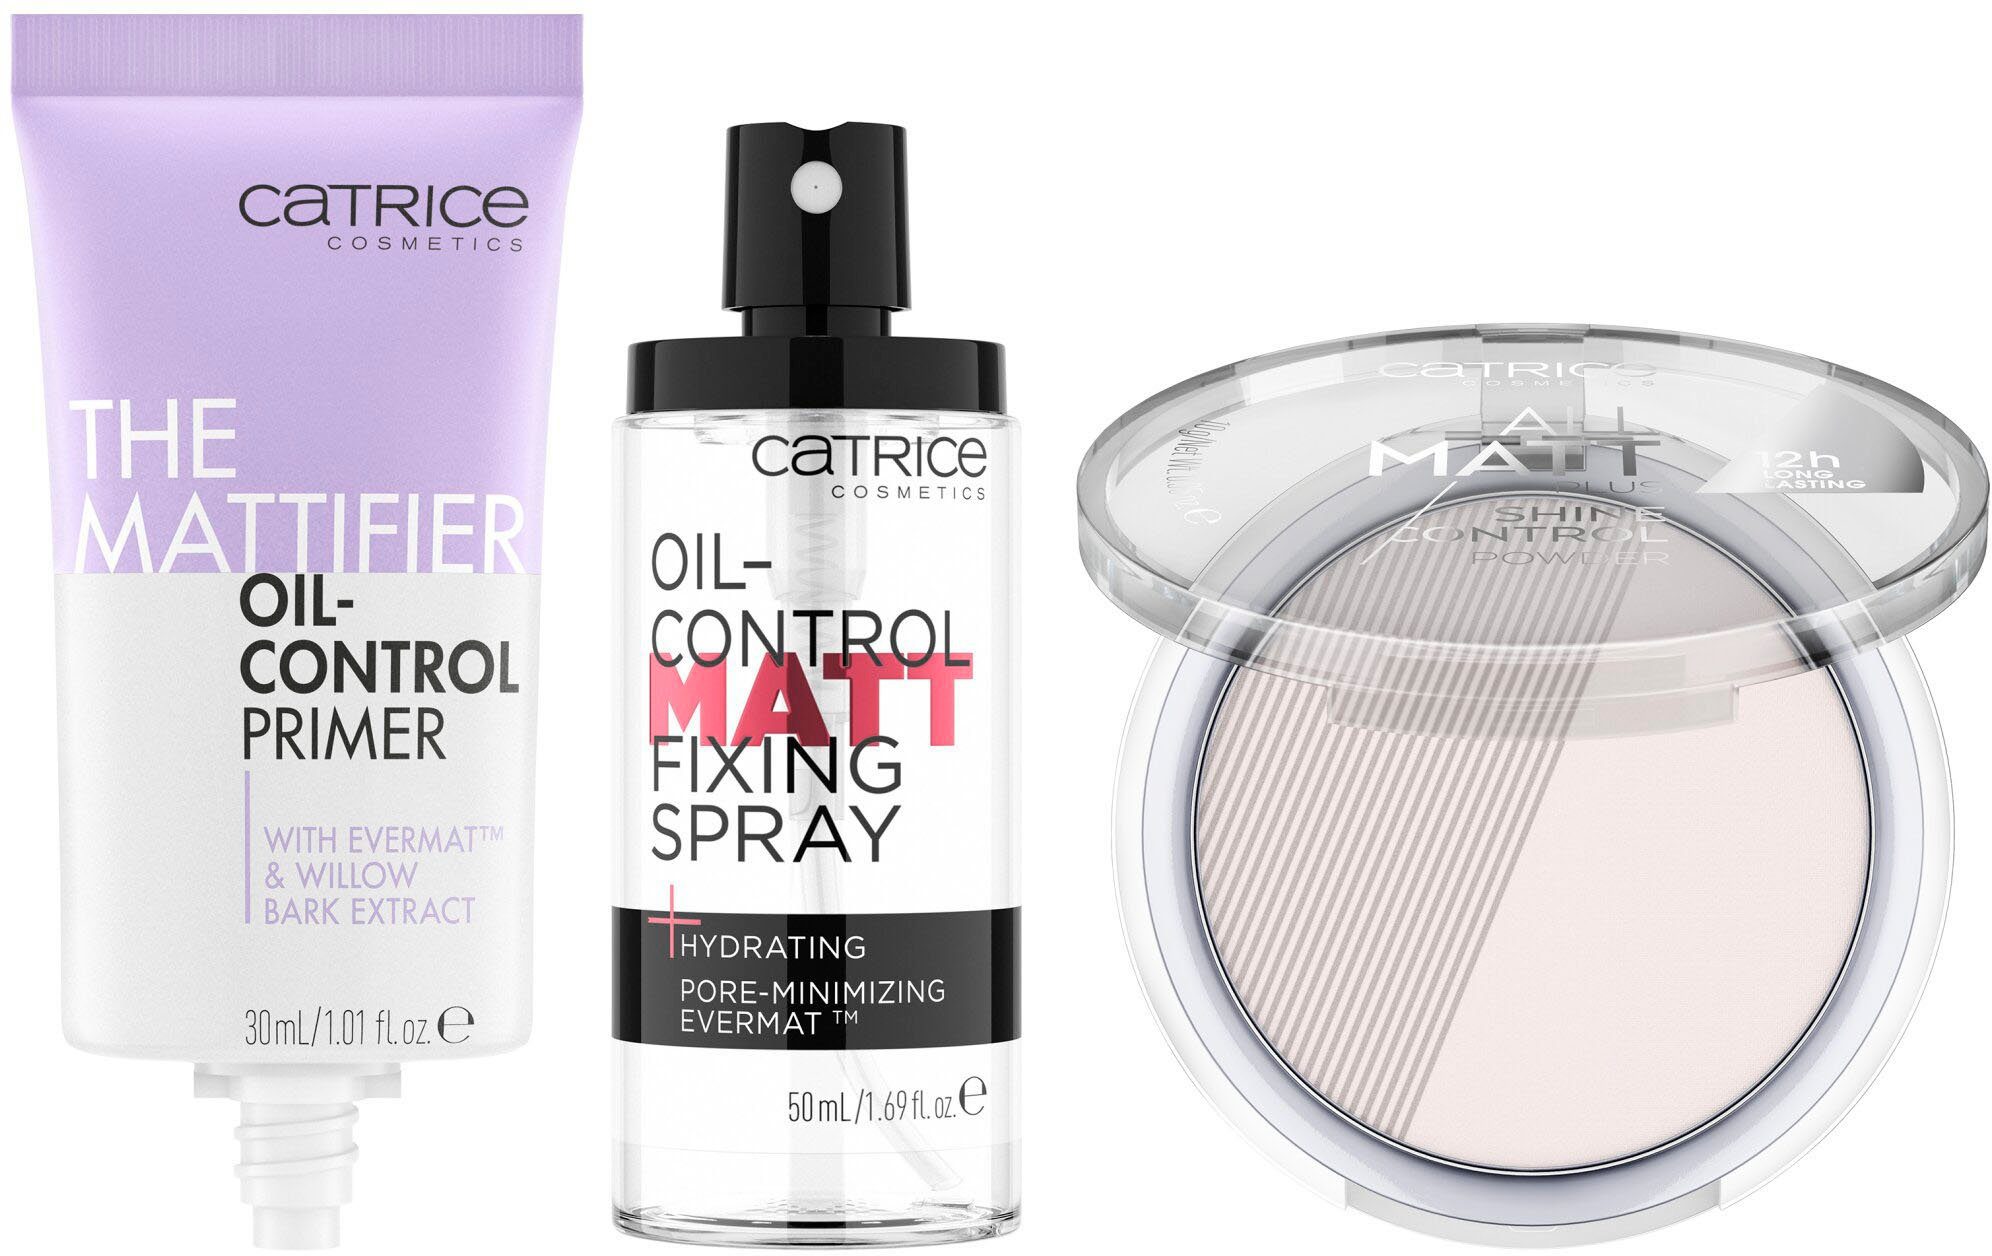 Catrice Make-up Set The Matte 3-tlg. Face Set, Pro